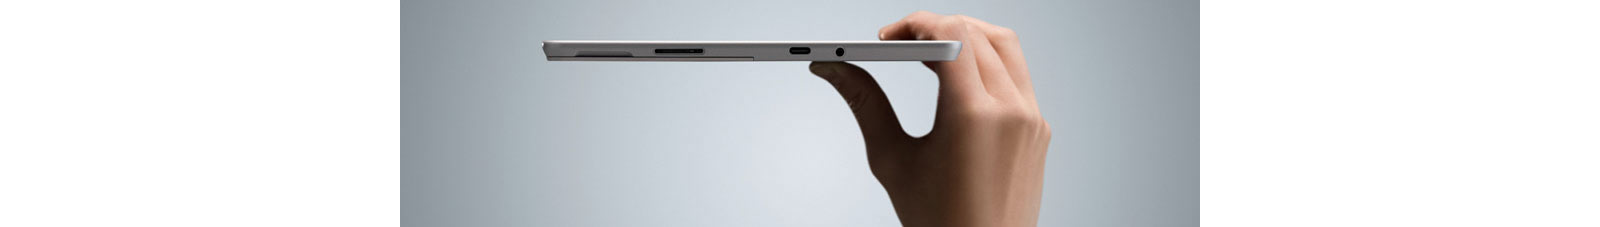 Surface Go LTE モデル KAZ-00032